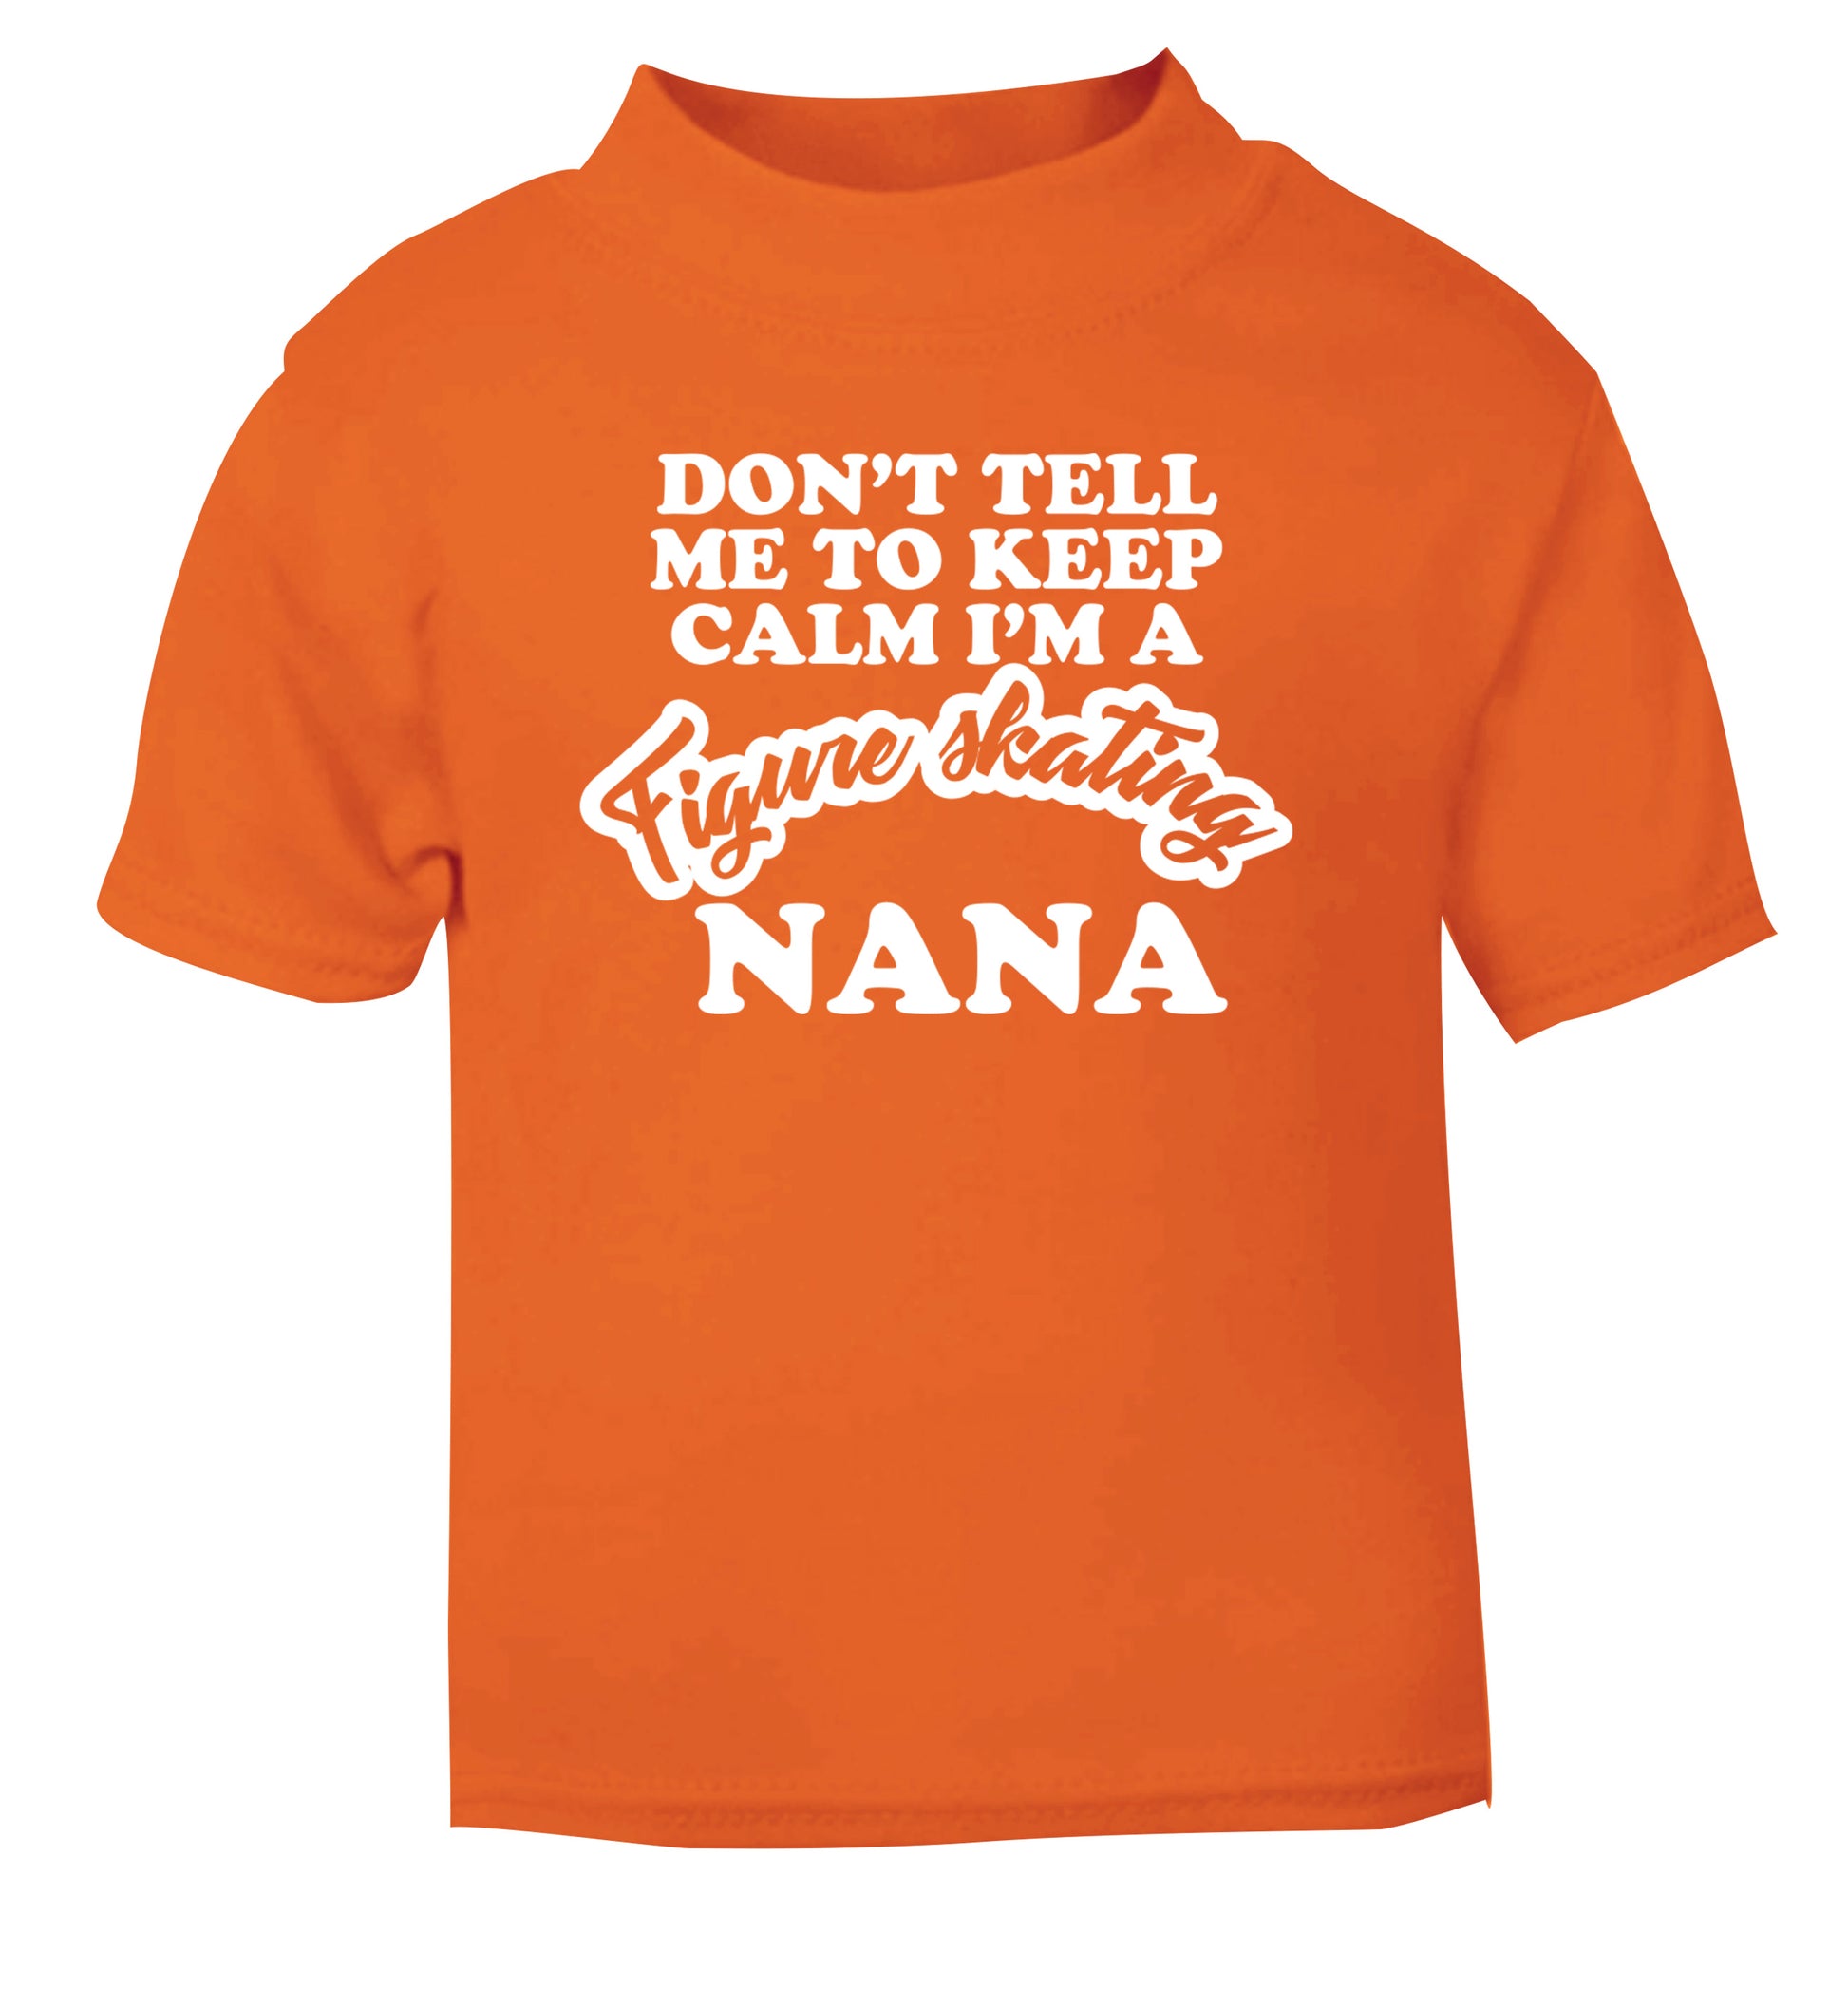 Don't tell me to keep calm I'm a figure skating nana orange Baby Toddler Tshirt 2 Years